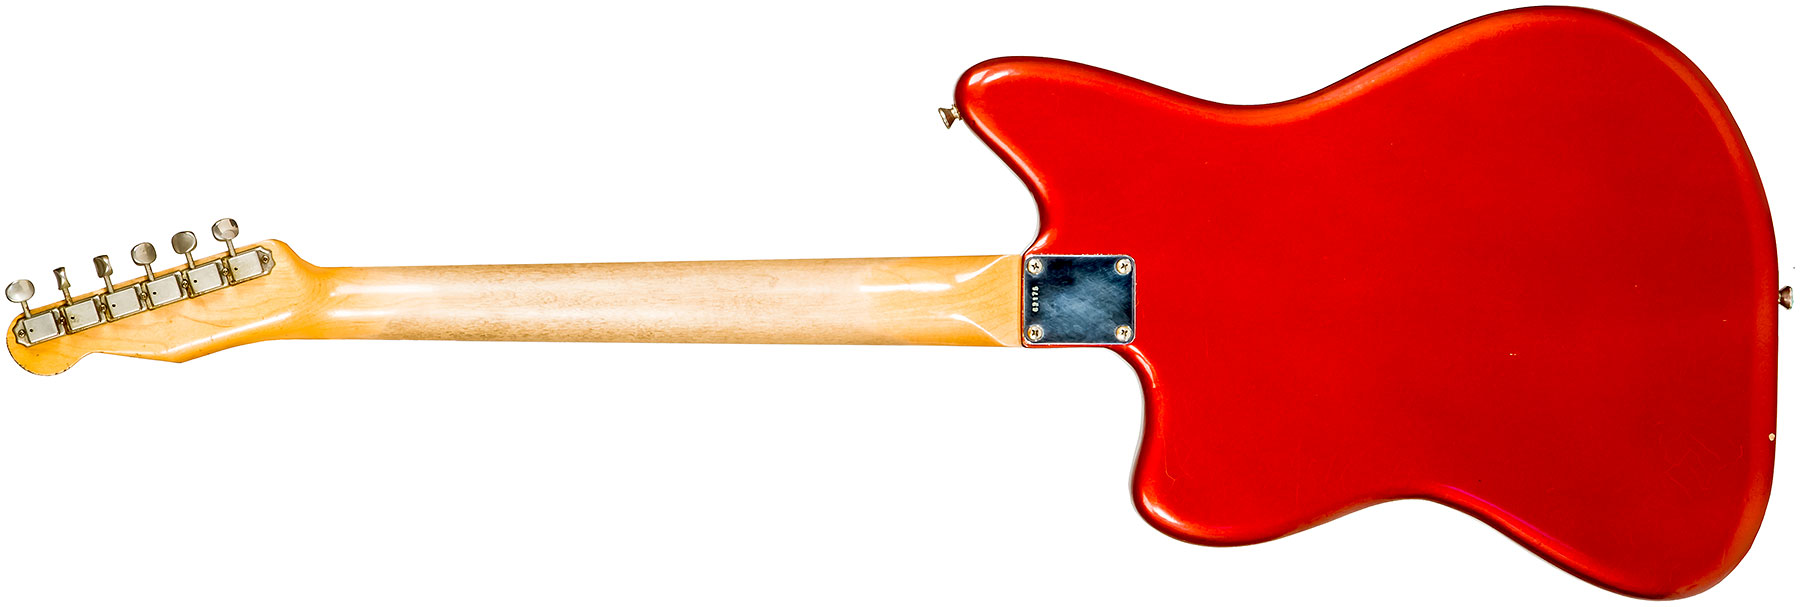 Rebelrelic Wrangler 2h Trem Rw #62175 - Light Aged Candy Apple Red - Semi hollow elektriche gitaar - Variation 1